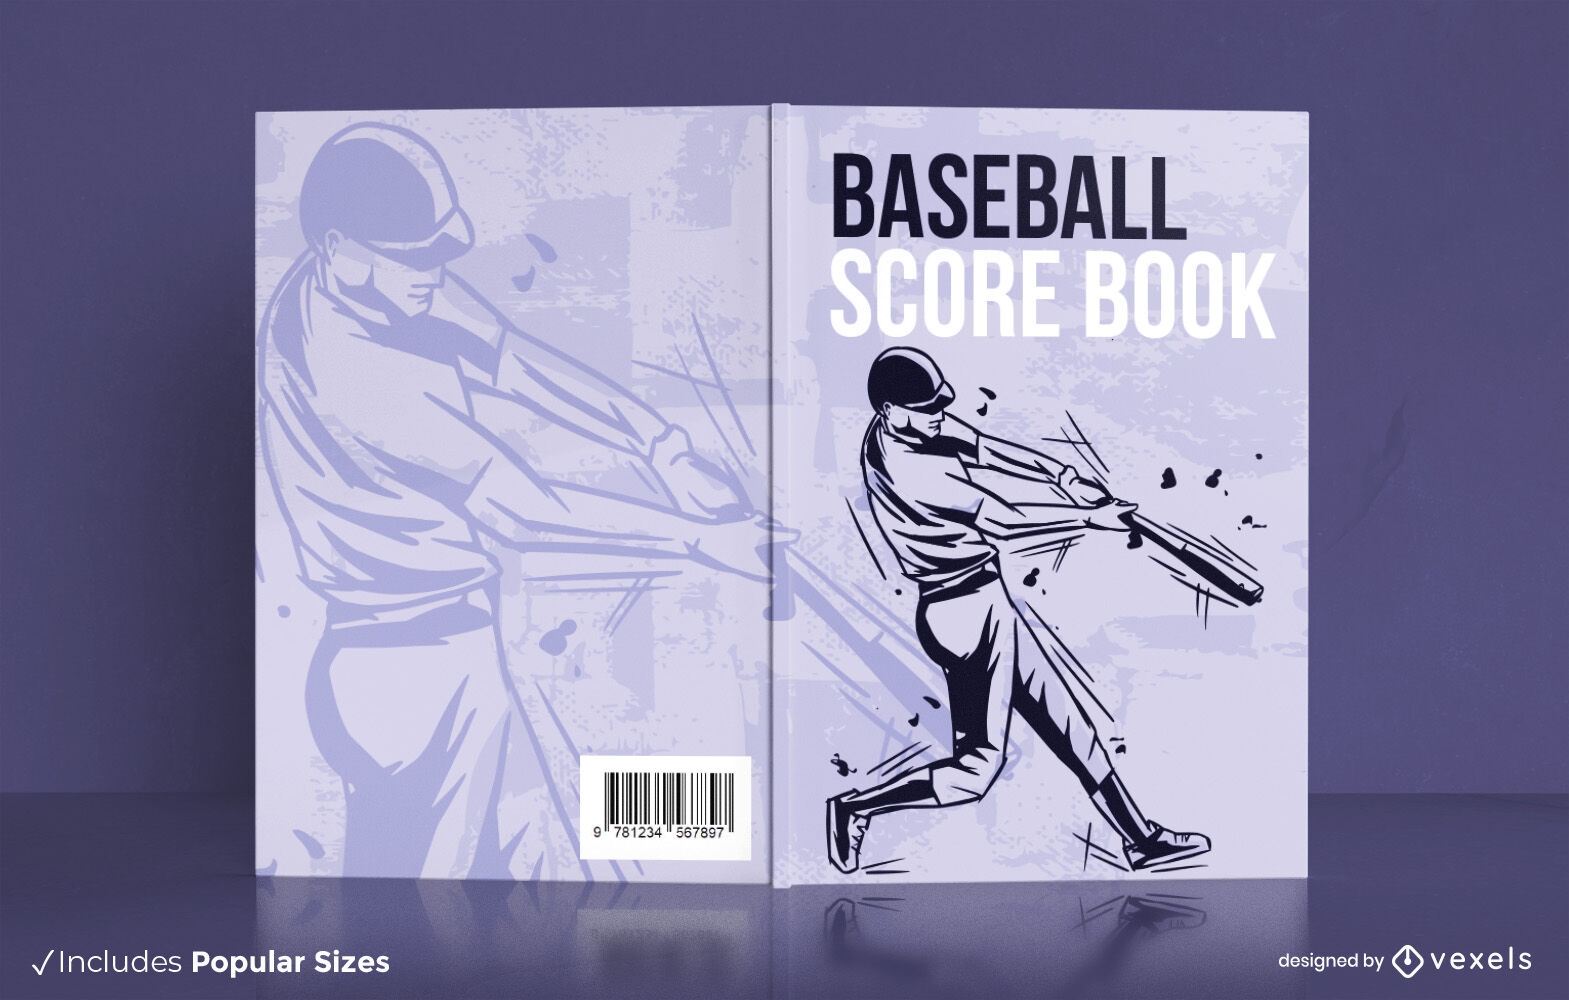 Baseball score book cover design